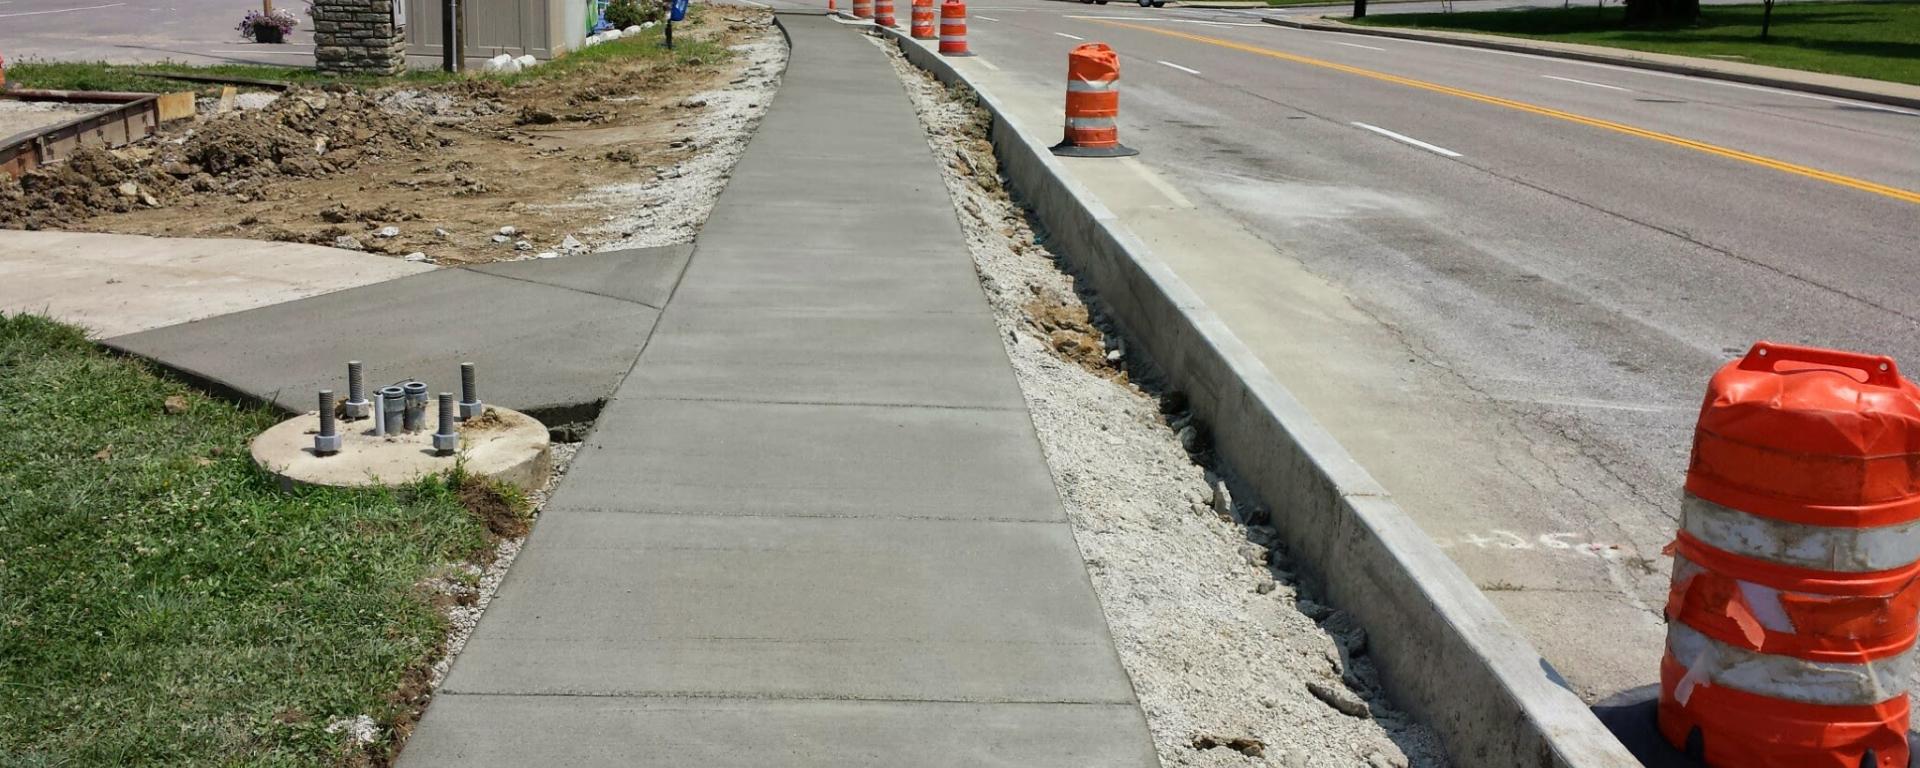 newly poured concrete sidewalk